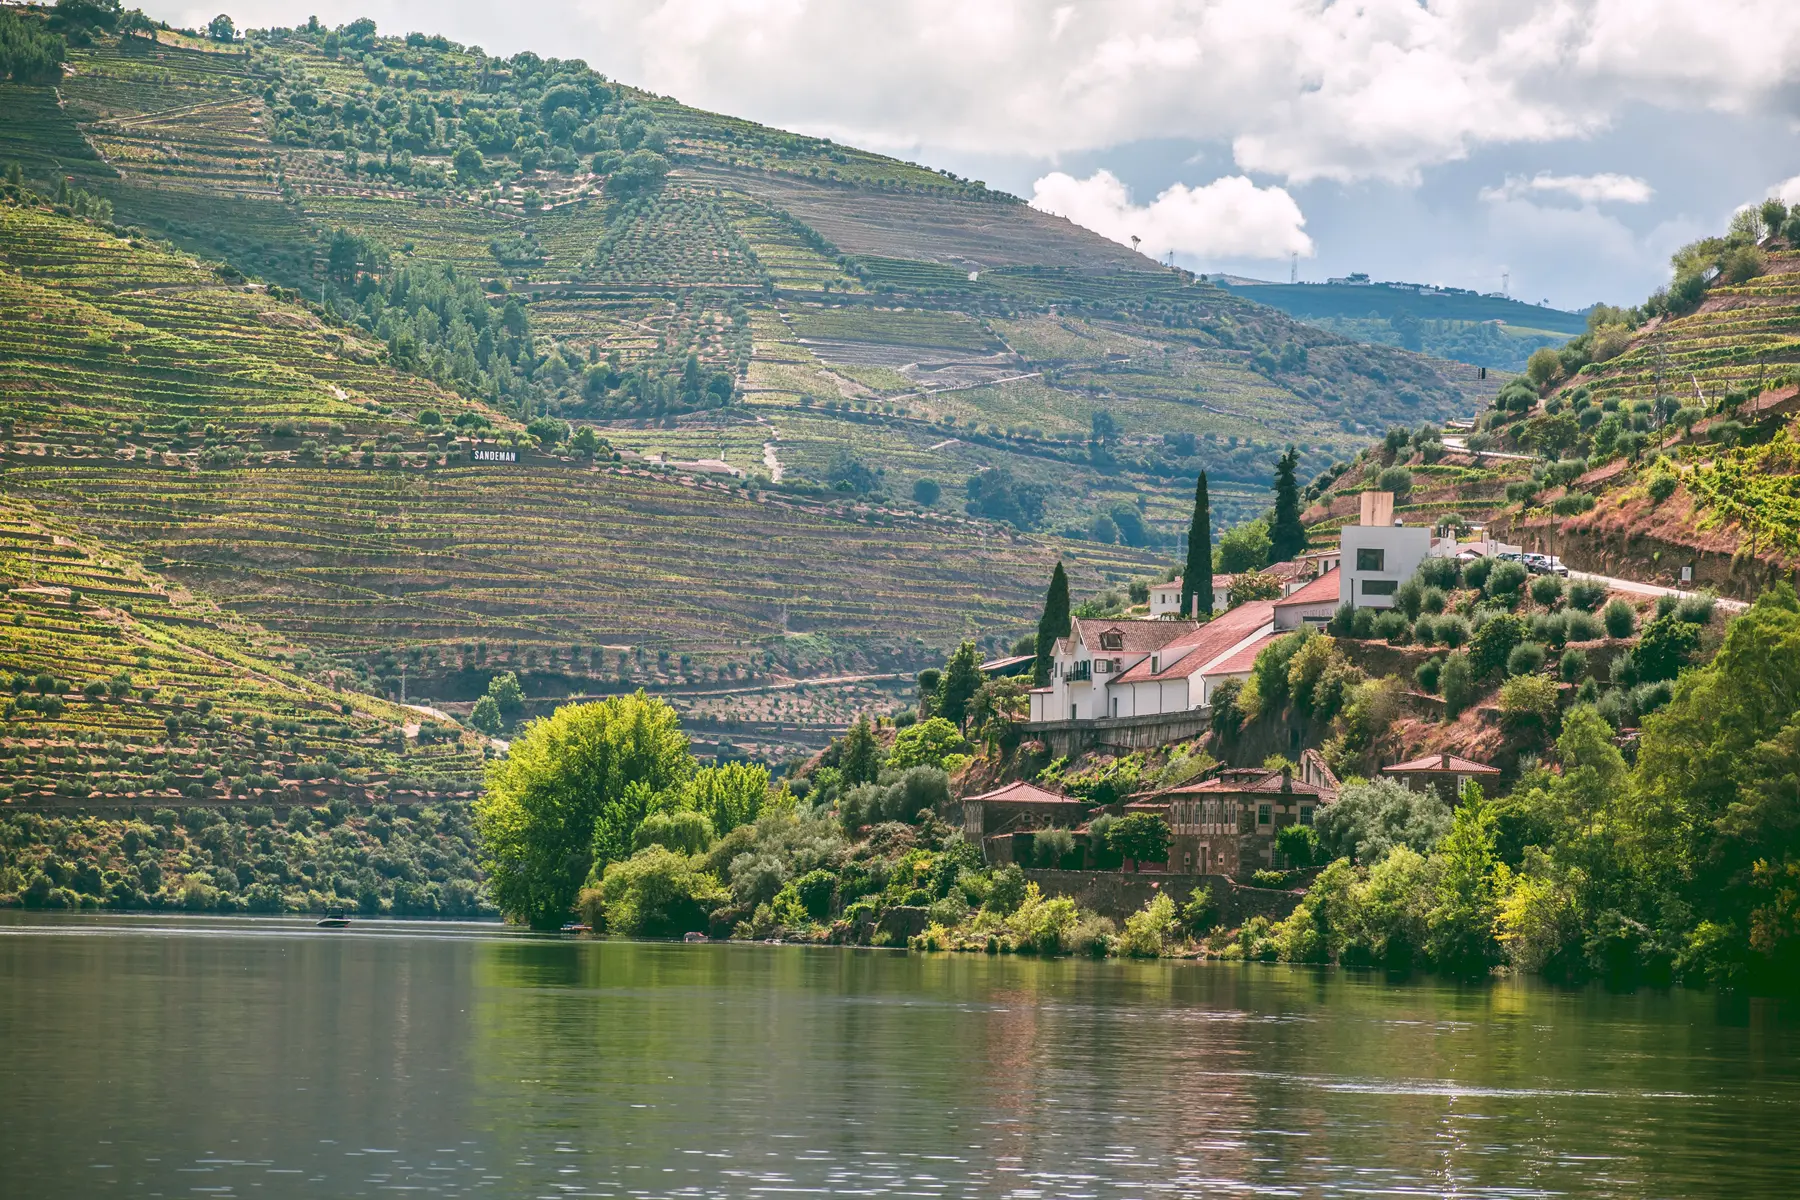 The scenic Douro river, photo by Sam Rach